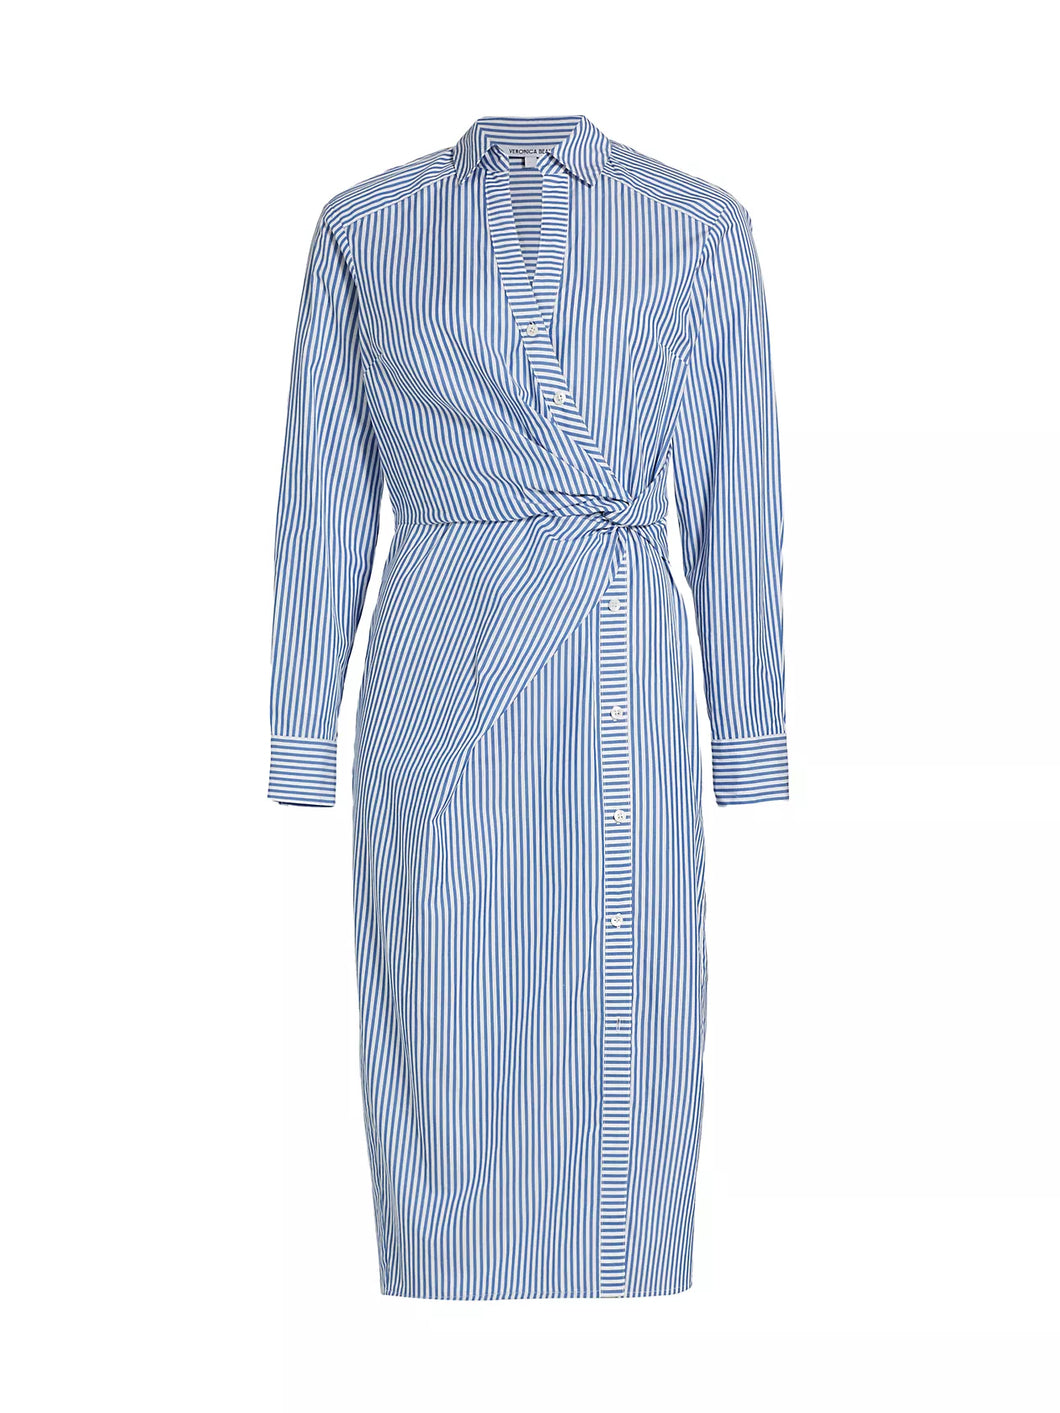 Veronica Beard Wright Dress - Blue/White Stripe